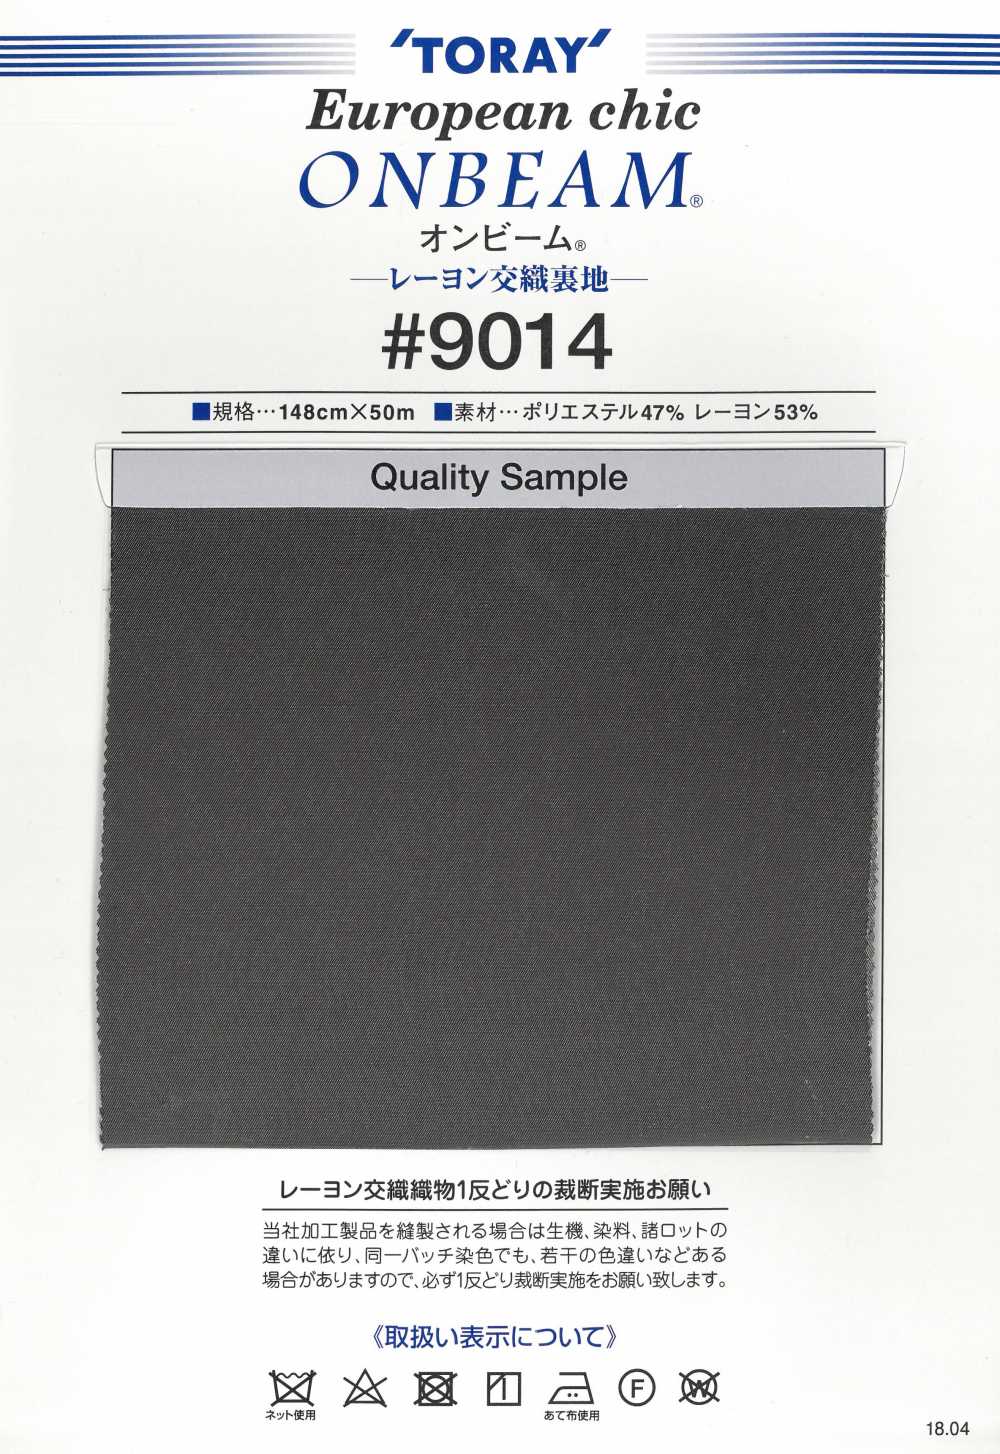 9014 Onbeam® Rayon Mixed Lining TORAY